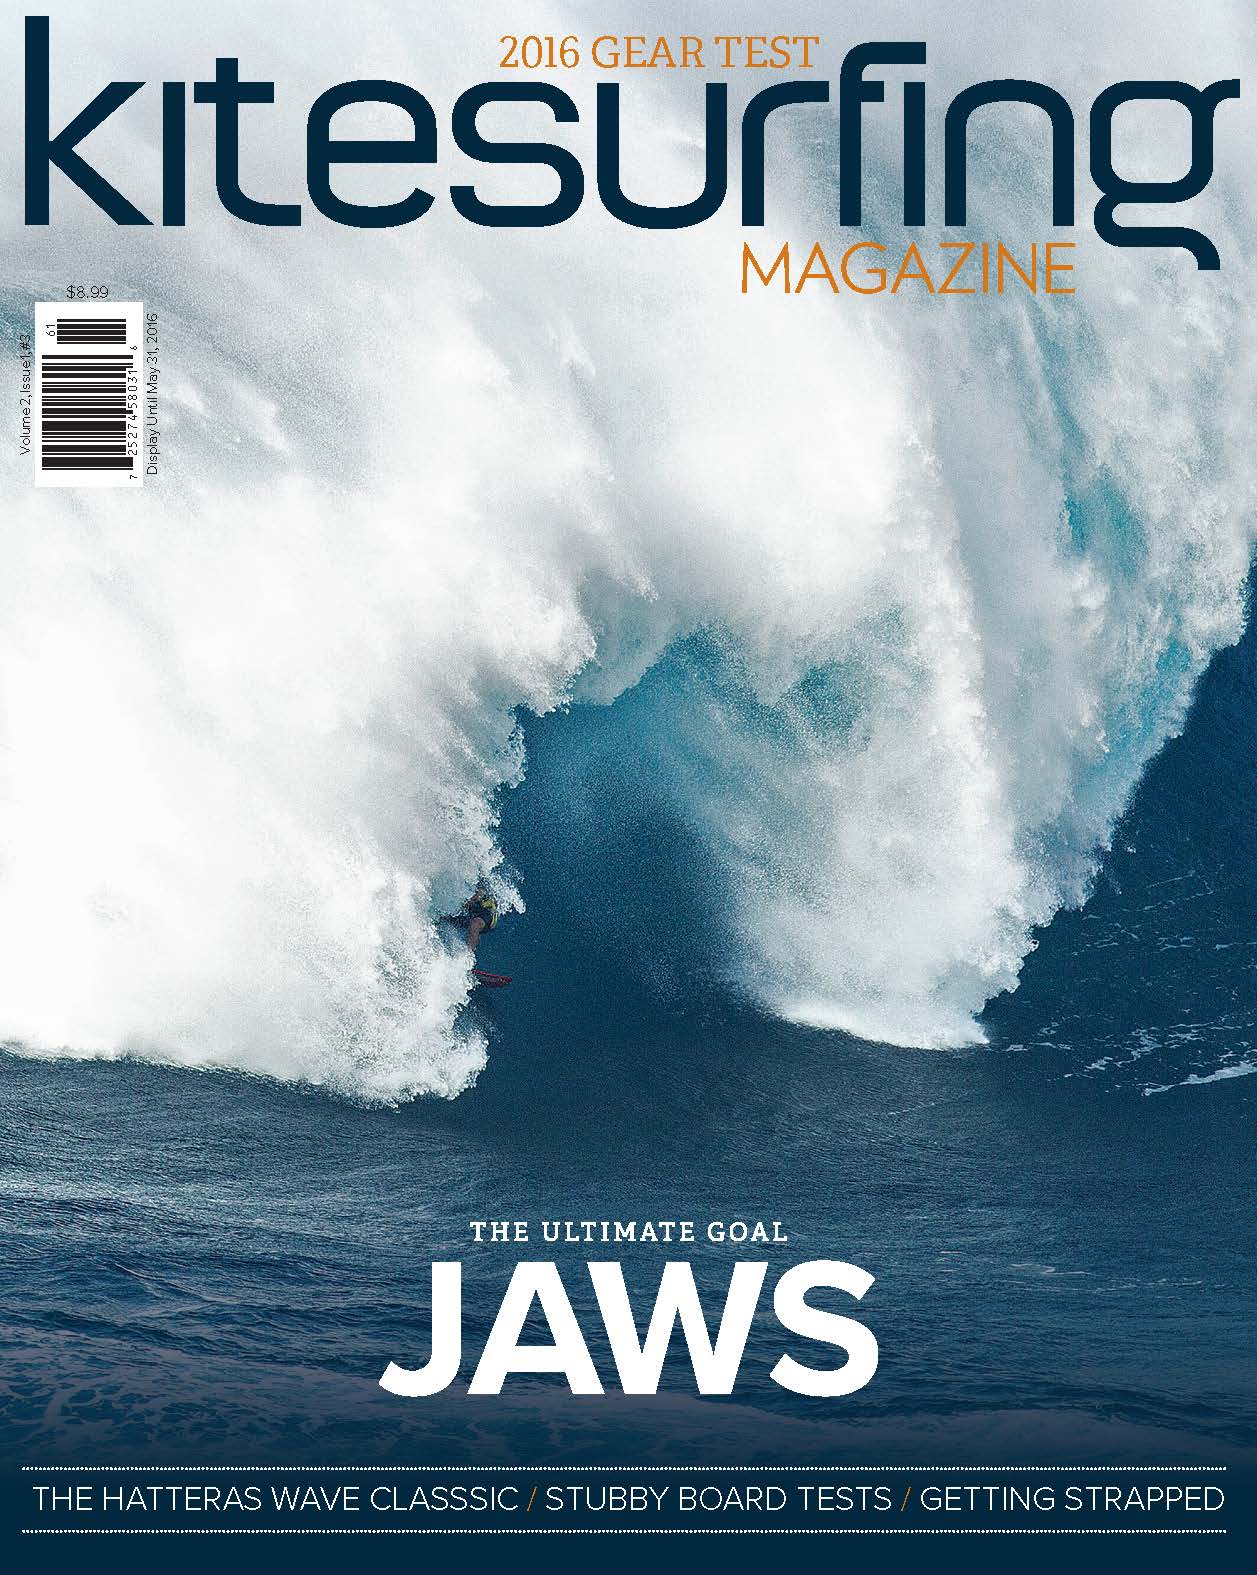 Kitesurfing Magazine Cover_#3